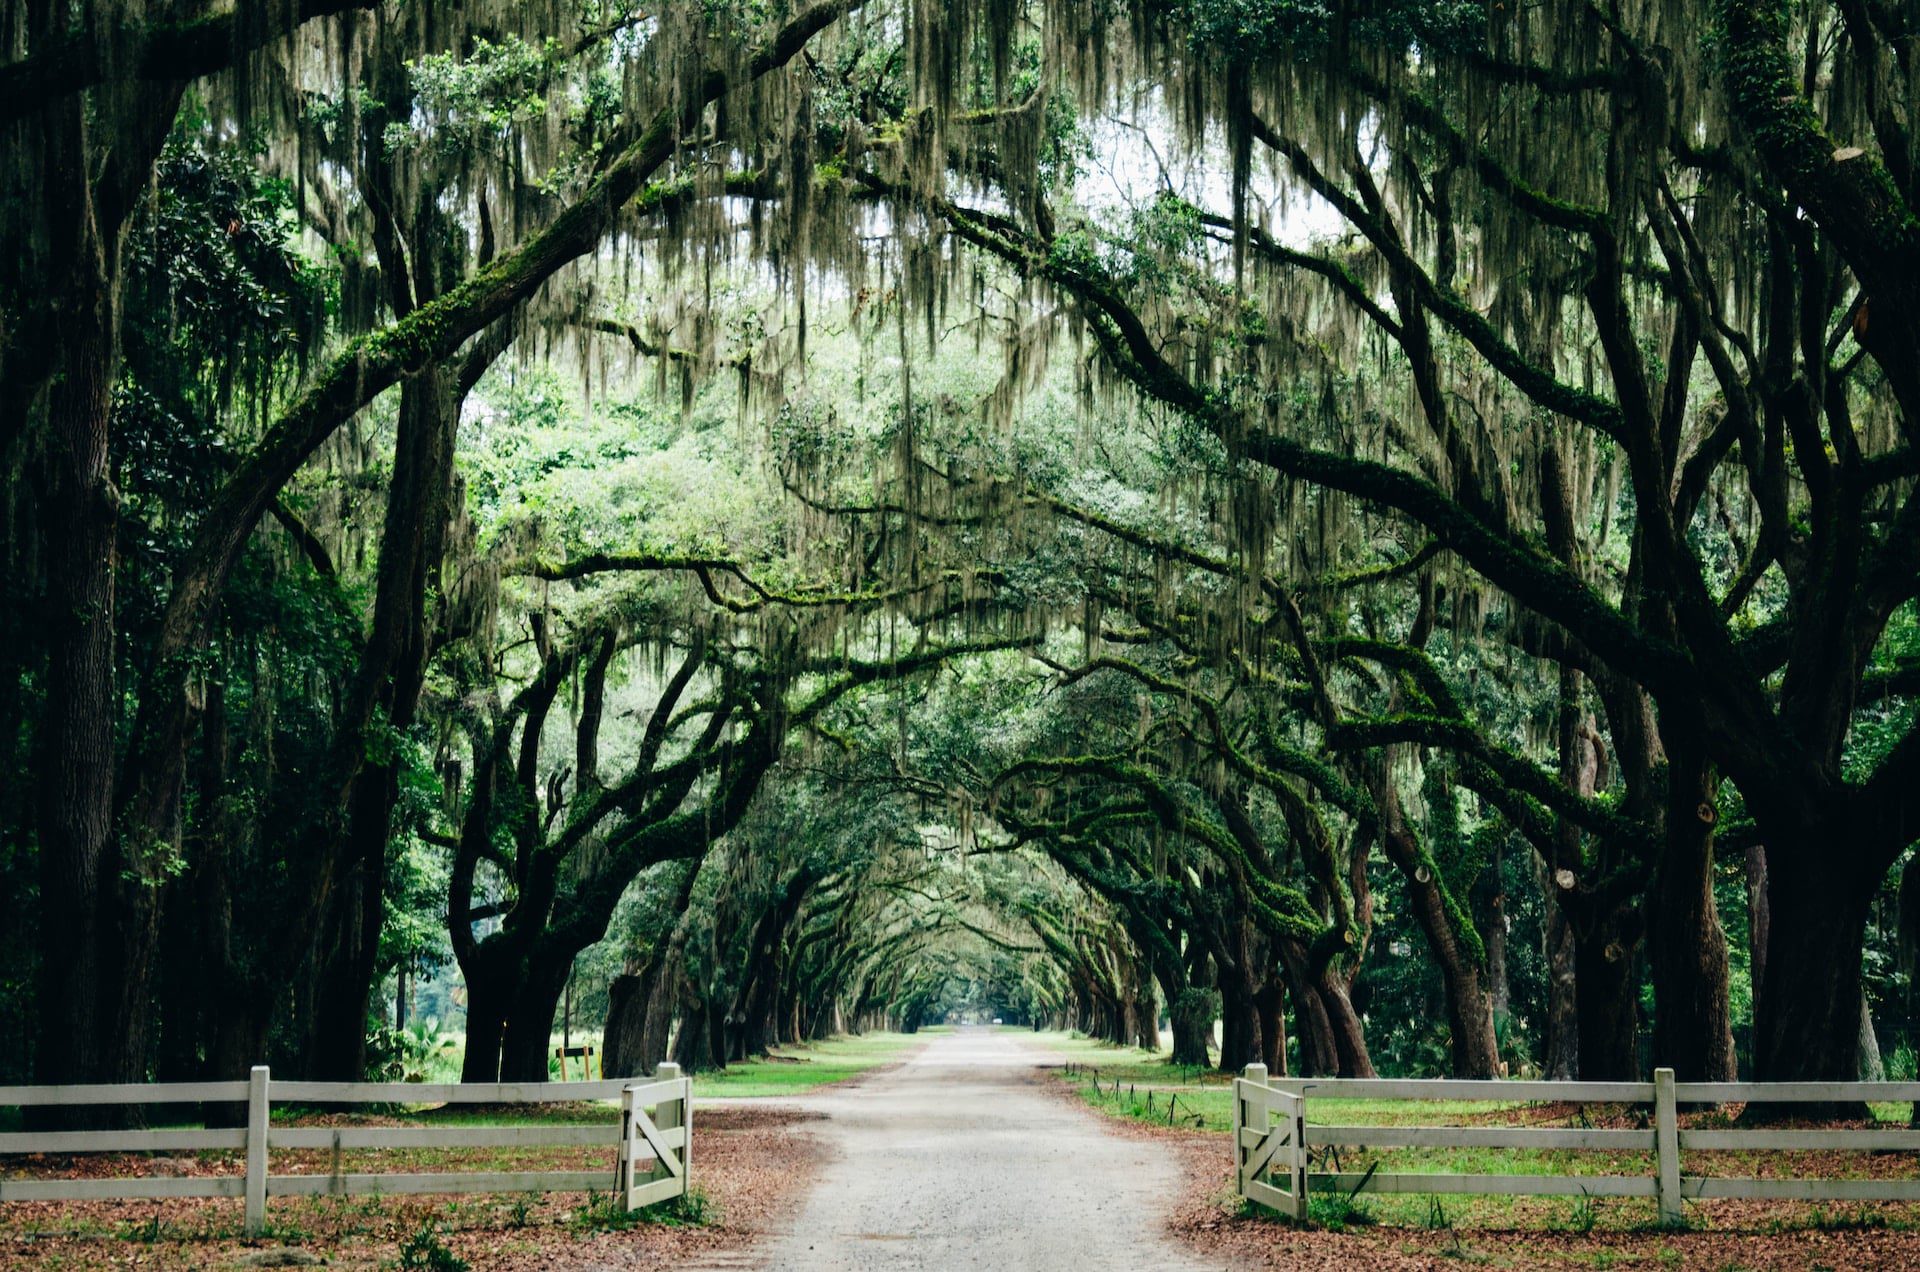 Green archway in a park in Savannah, Georgia.